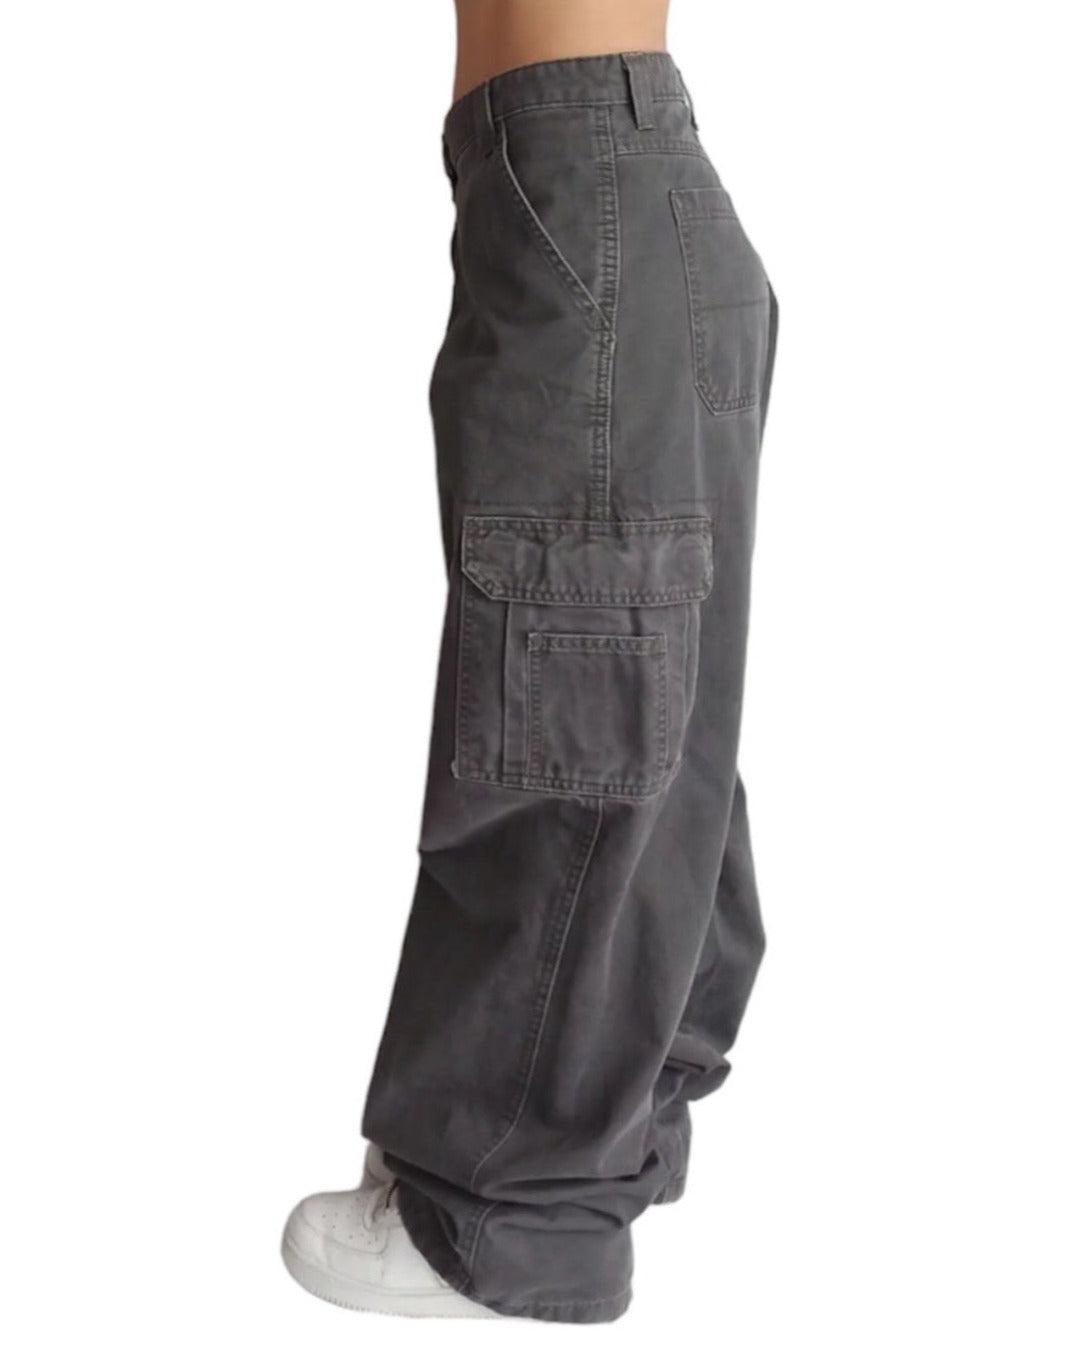 grey cargo pants